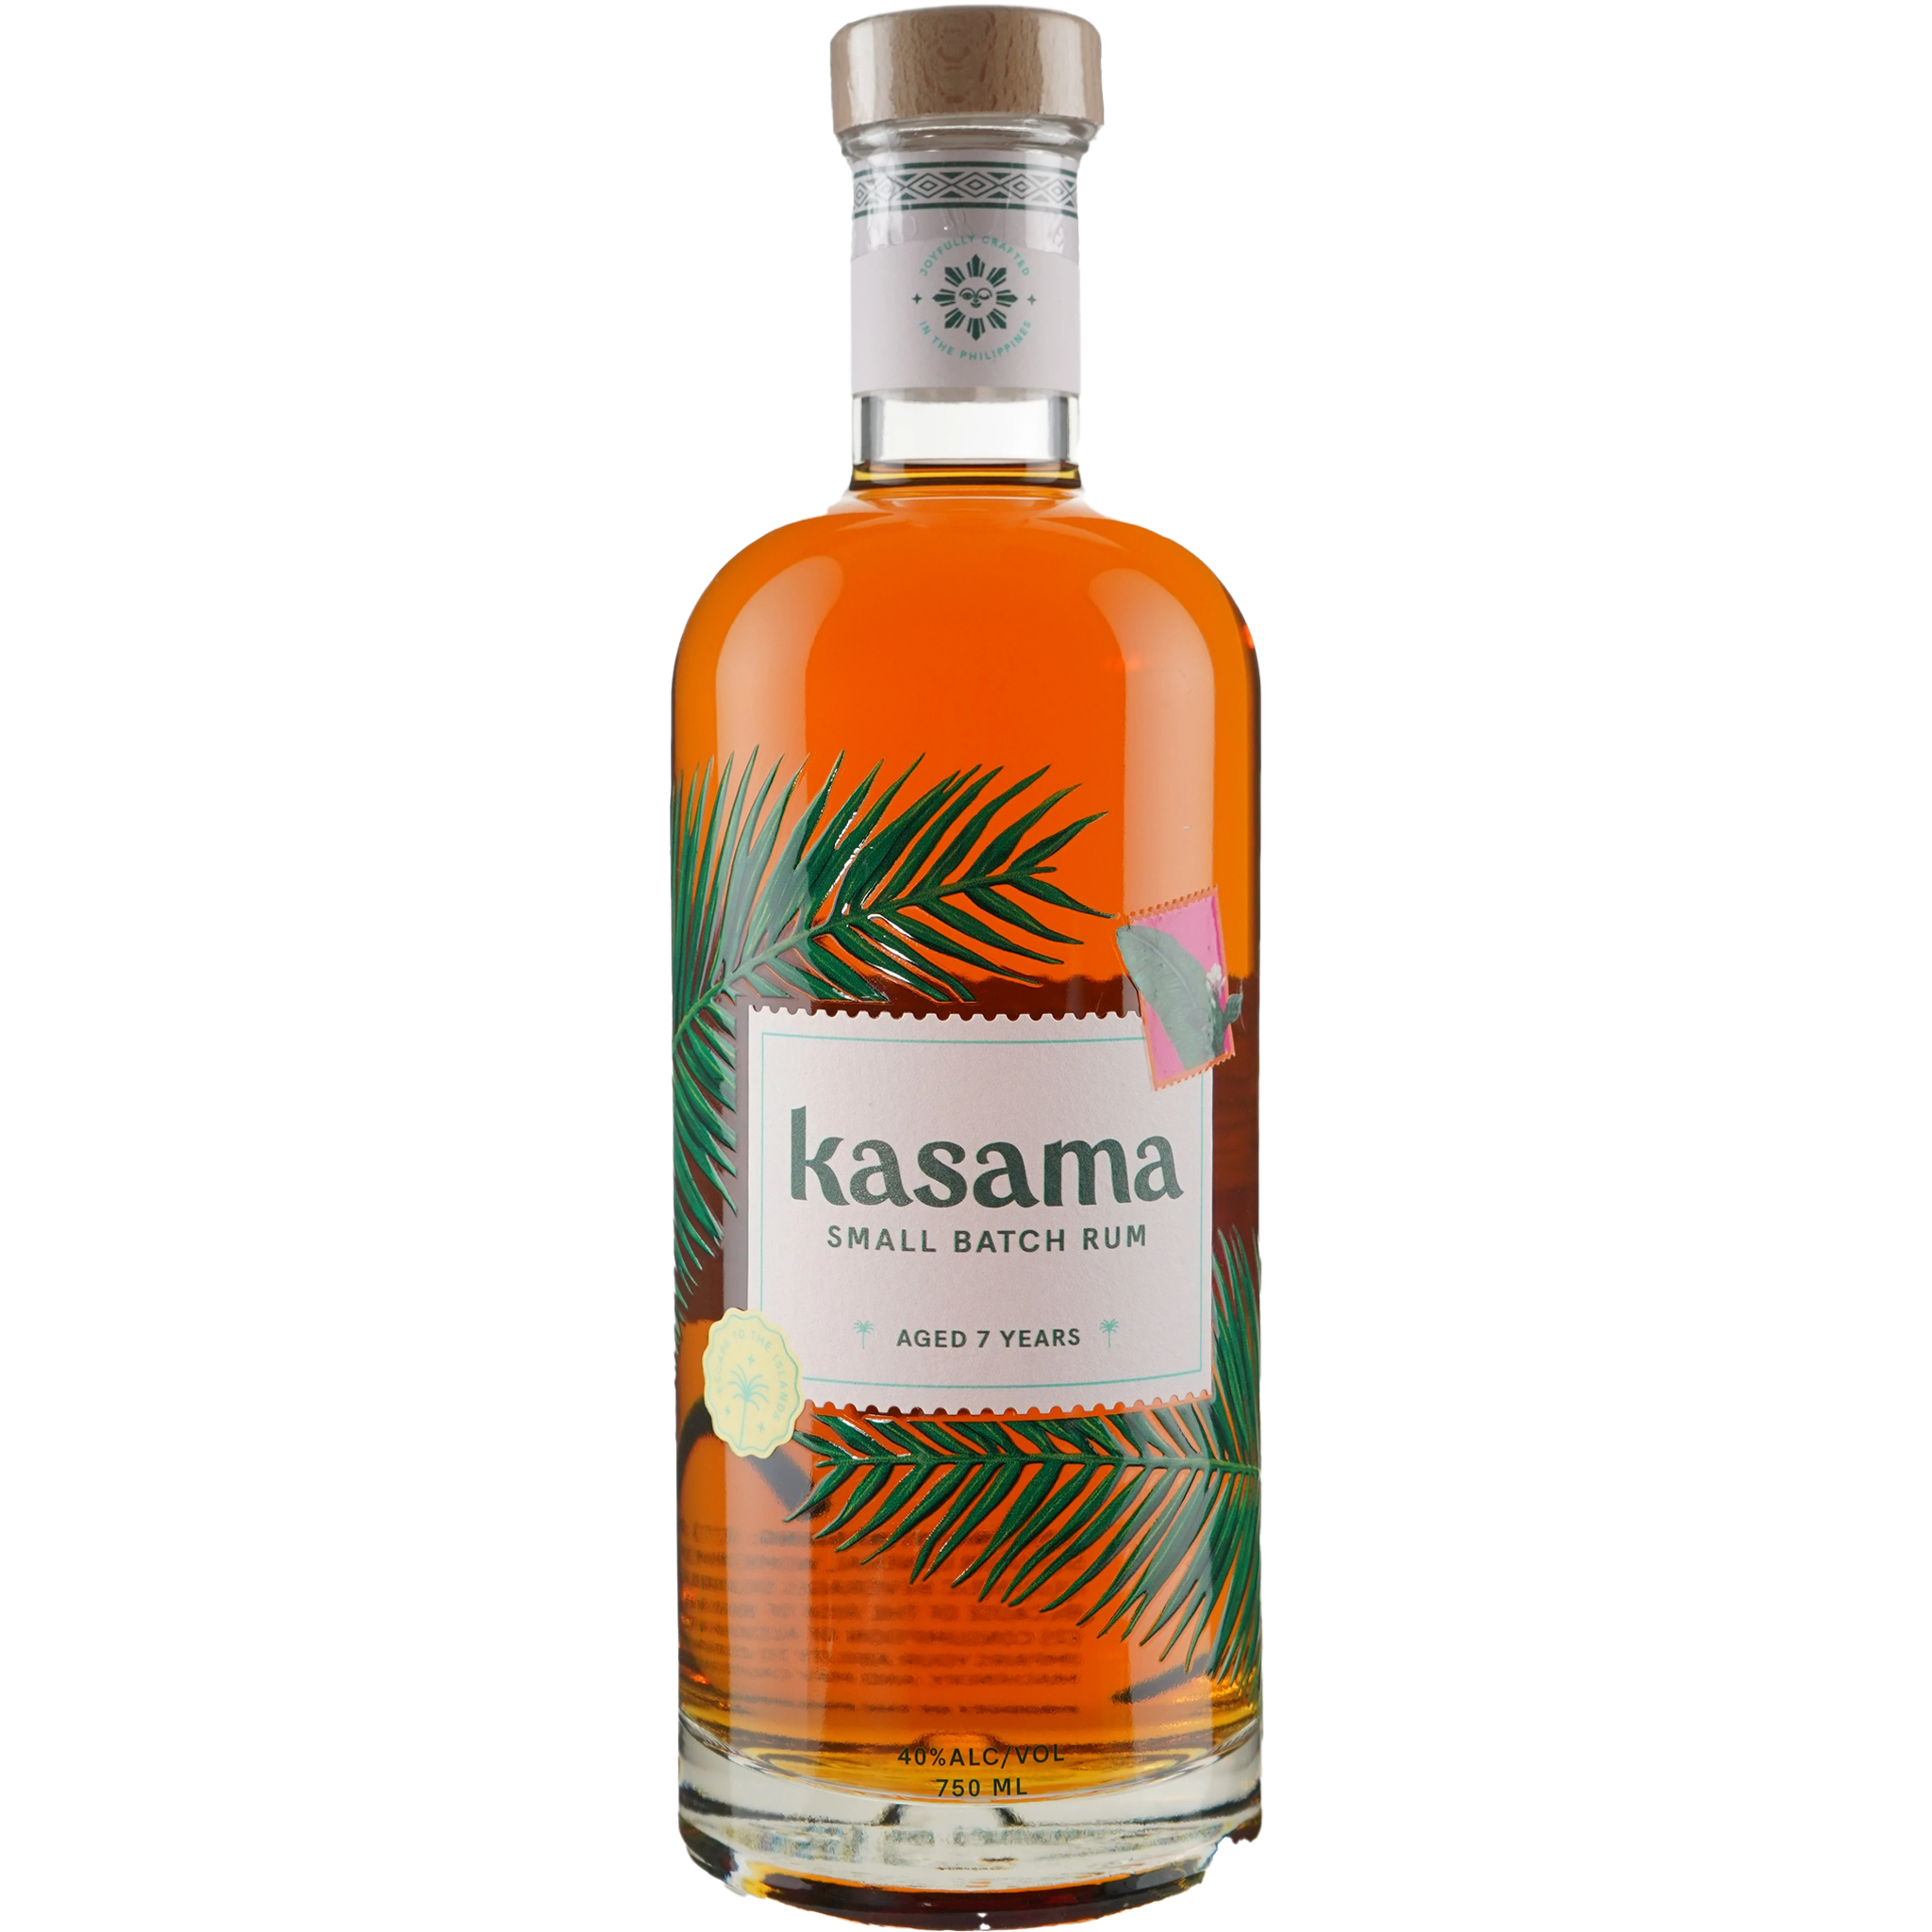 Kasama Small Batch Rum 7 years